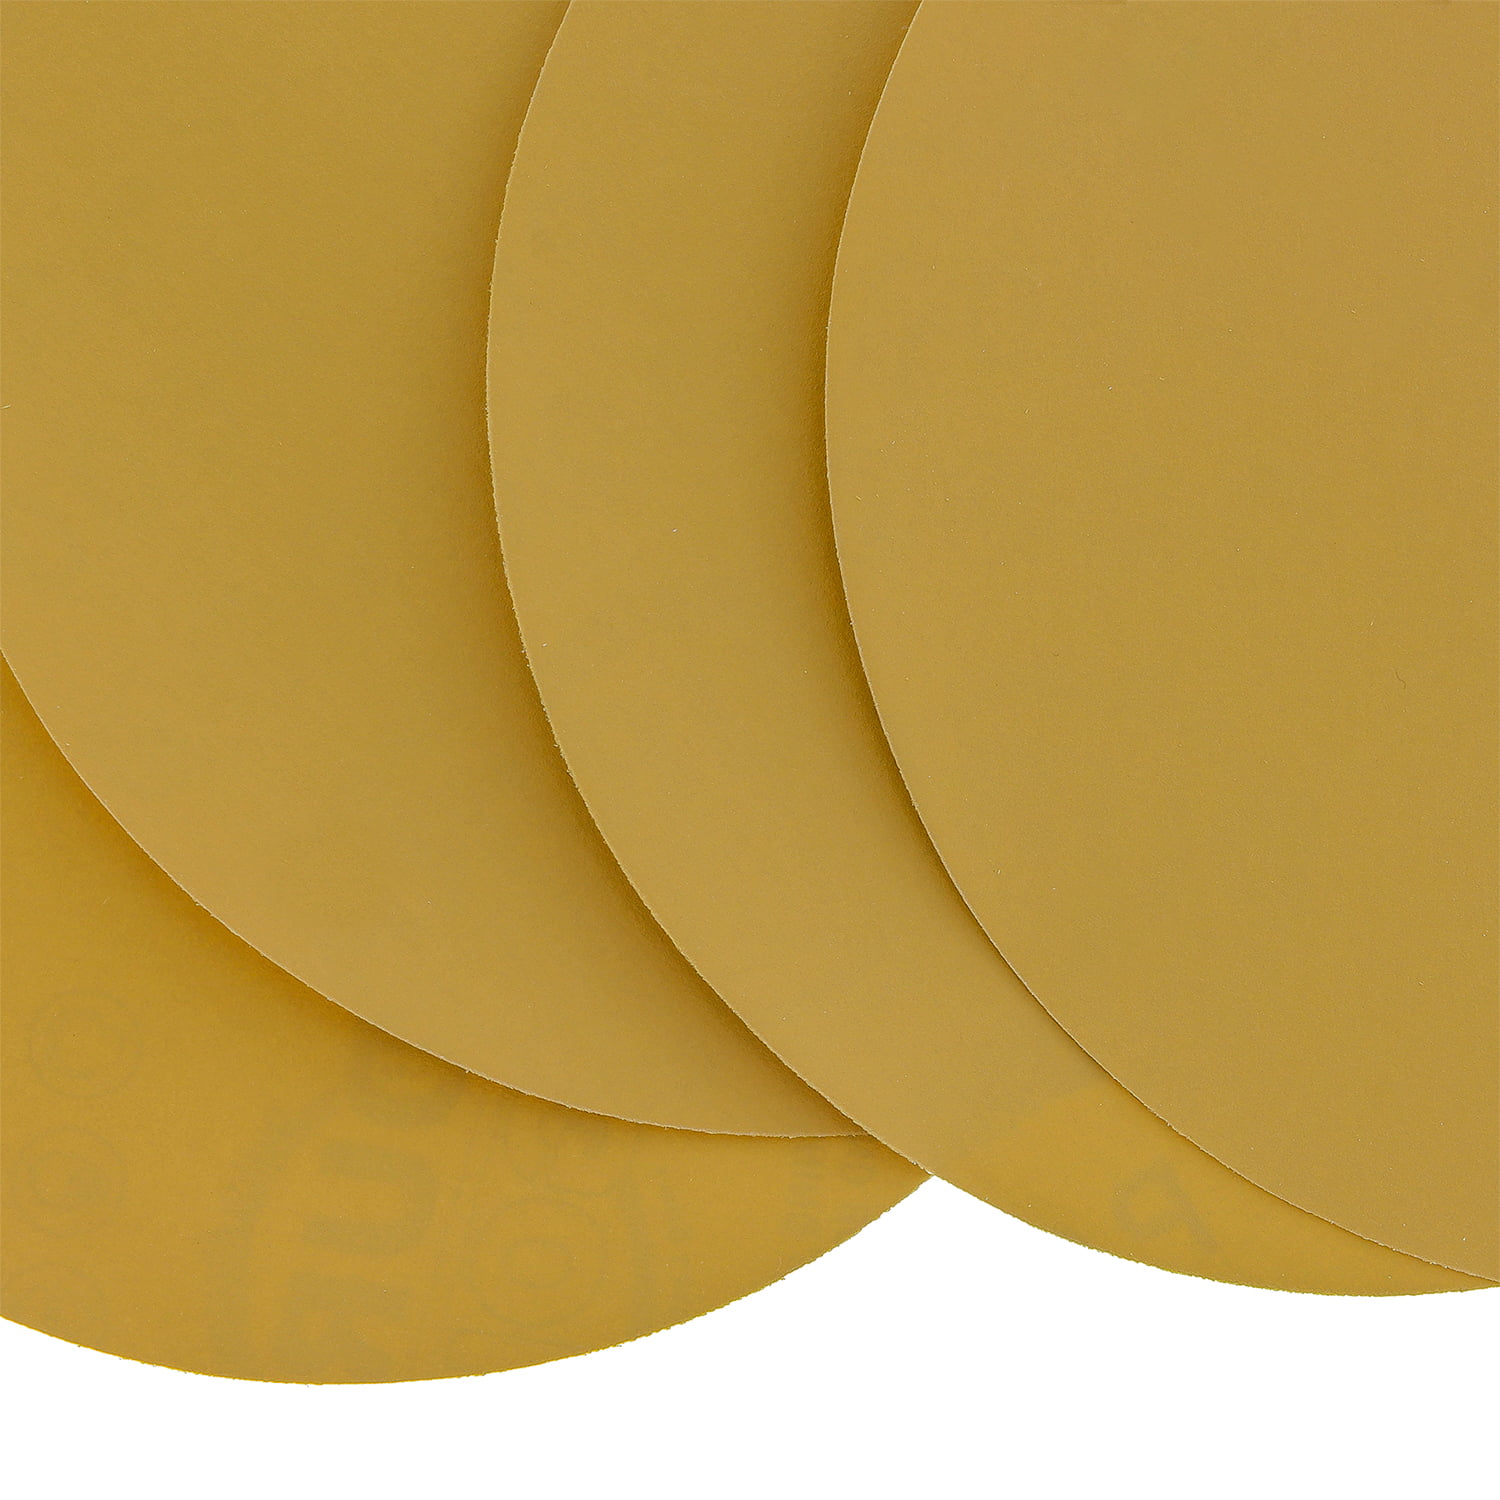 Premium Gold 6" PSA Sanding Discs Roll VARIETY Pack 600 discs 